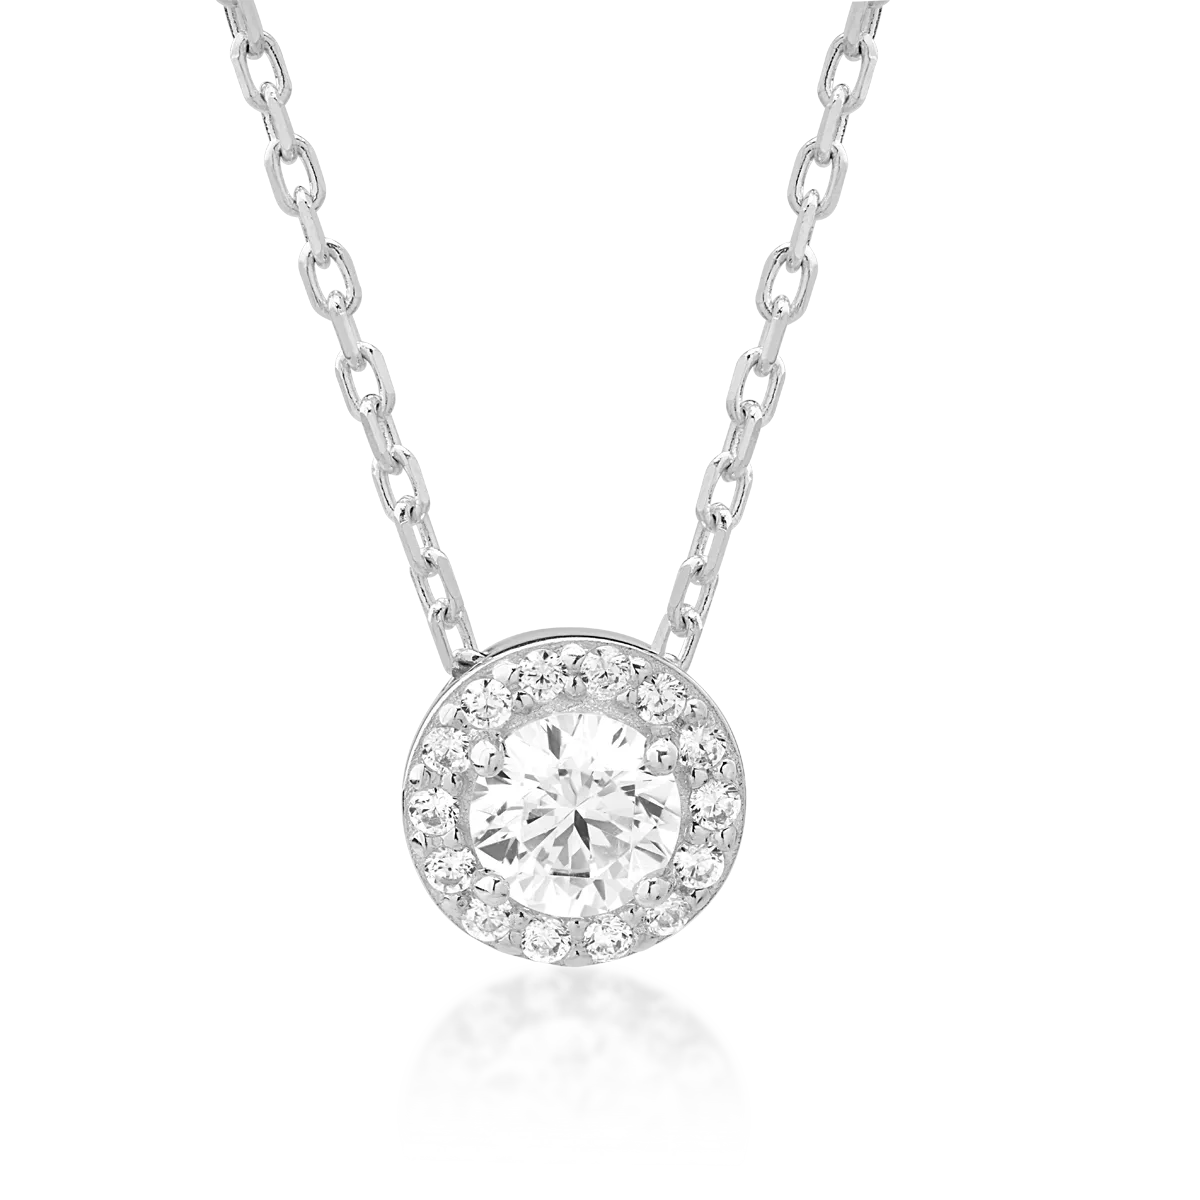 White gold round pendant necklace with zirconia